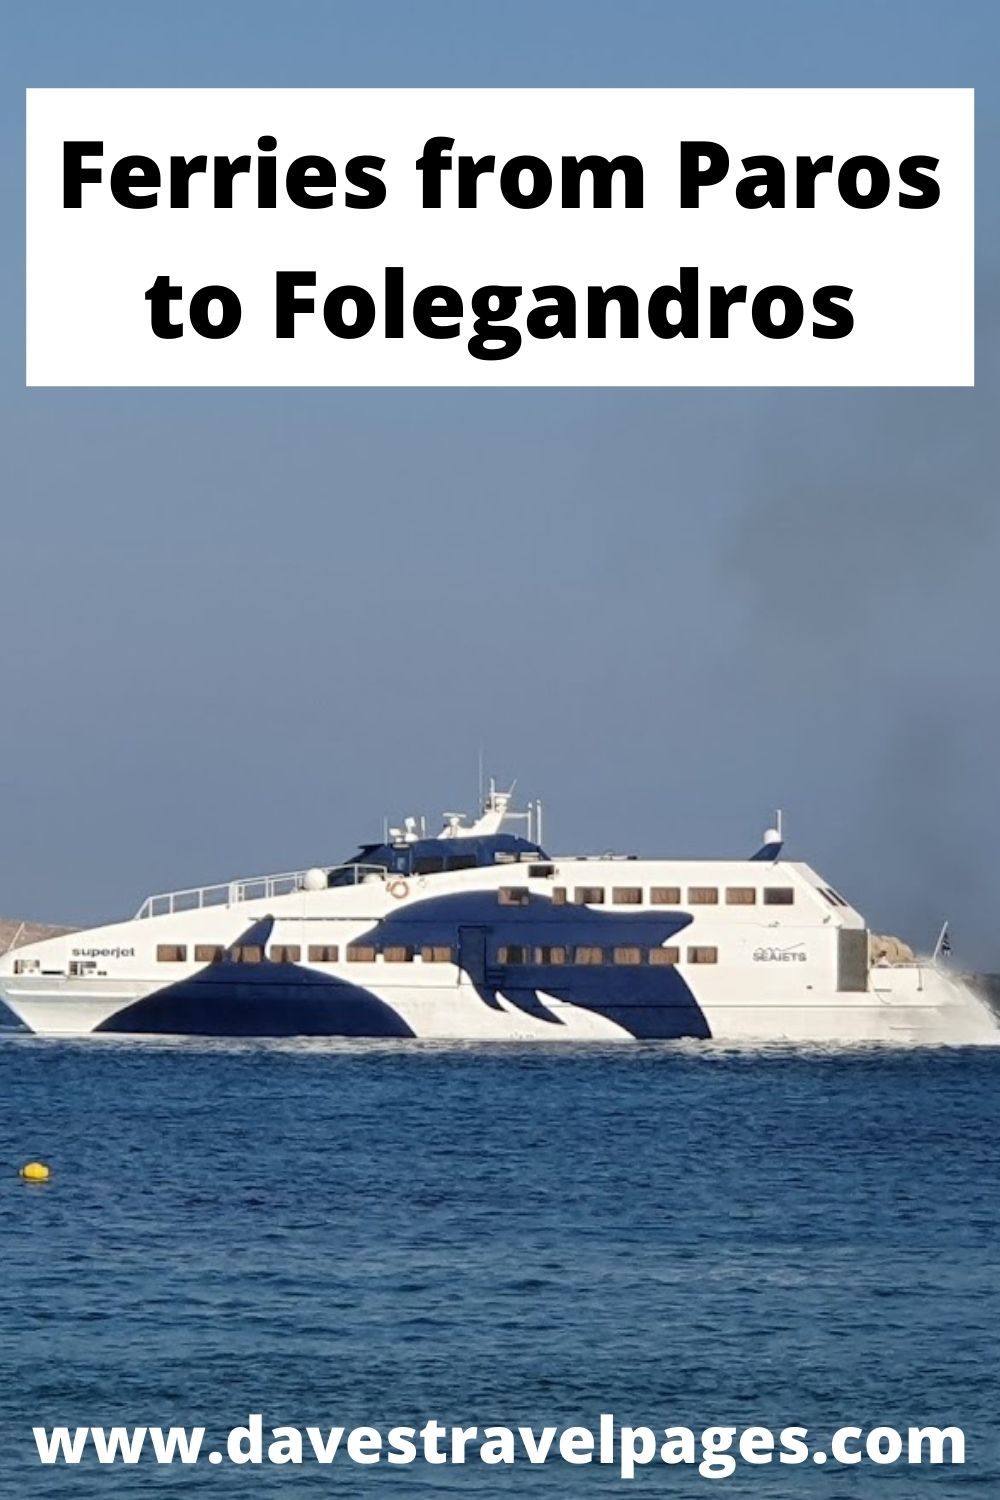 Ferries from Paros to Folegandros